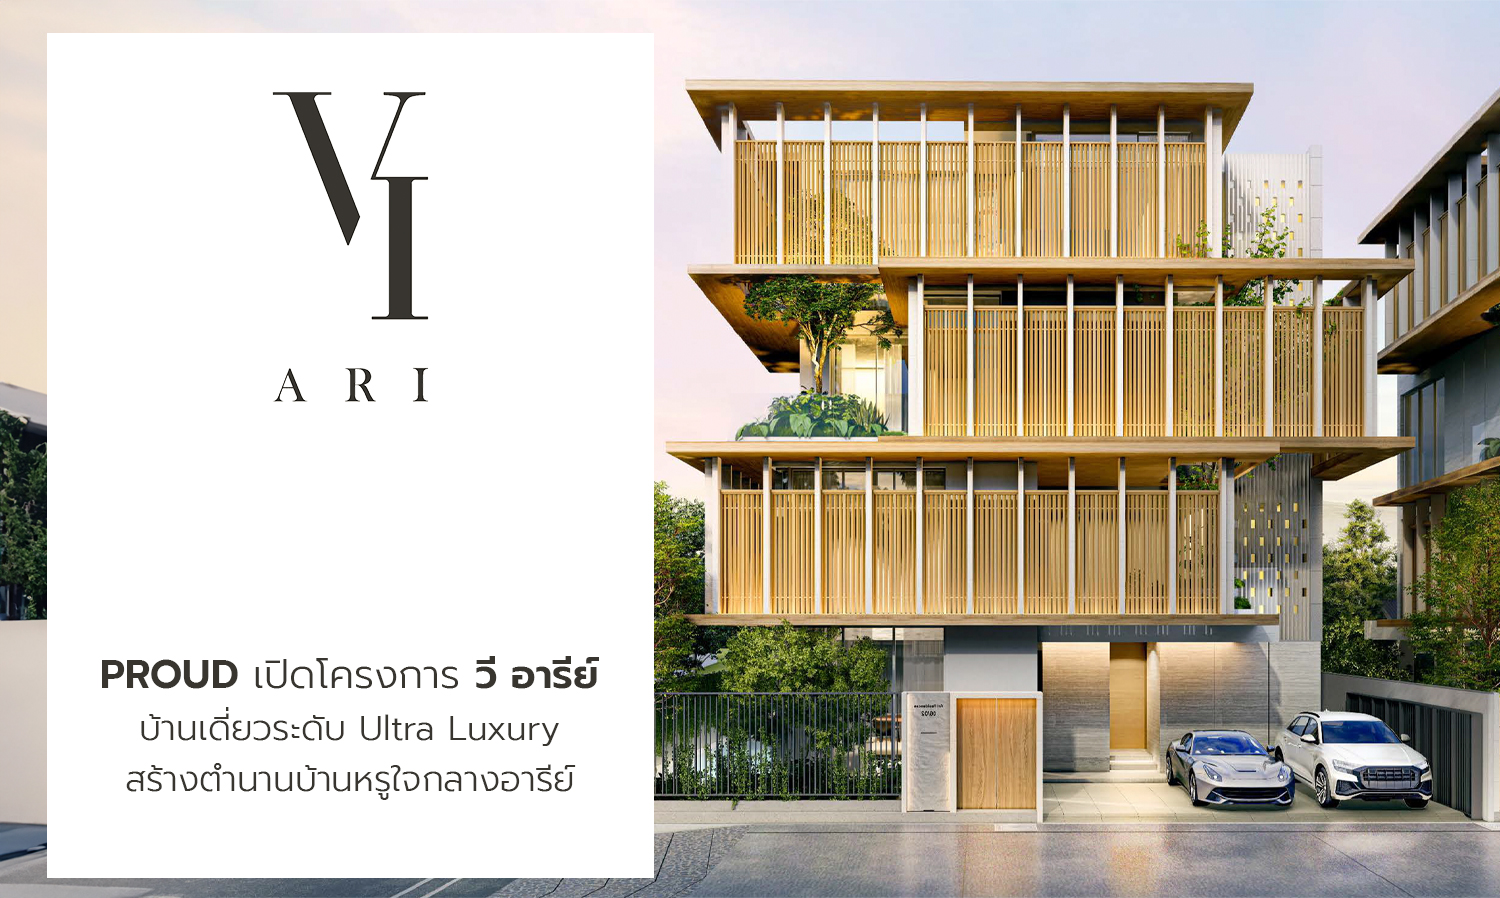 PROUD เปิดโครงการ วี อารีย์ บ้านเดี่ยวระดับ Ultra Luxury สร้างตำนานบ้านหรูใจกลางอารีย์